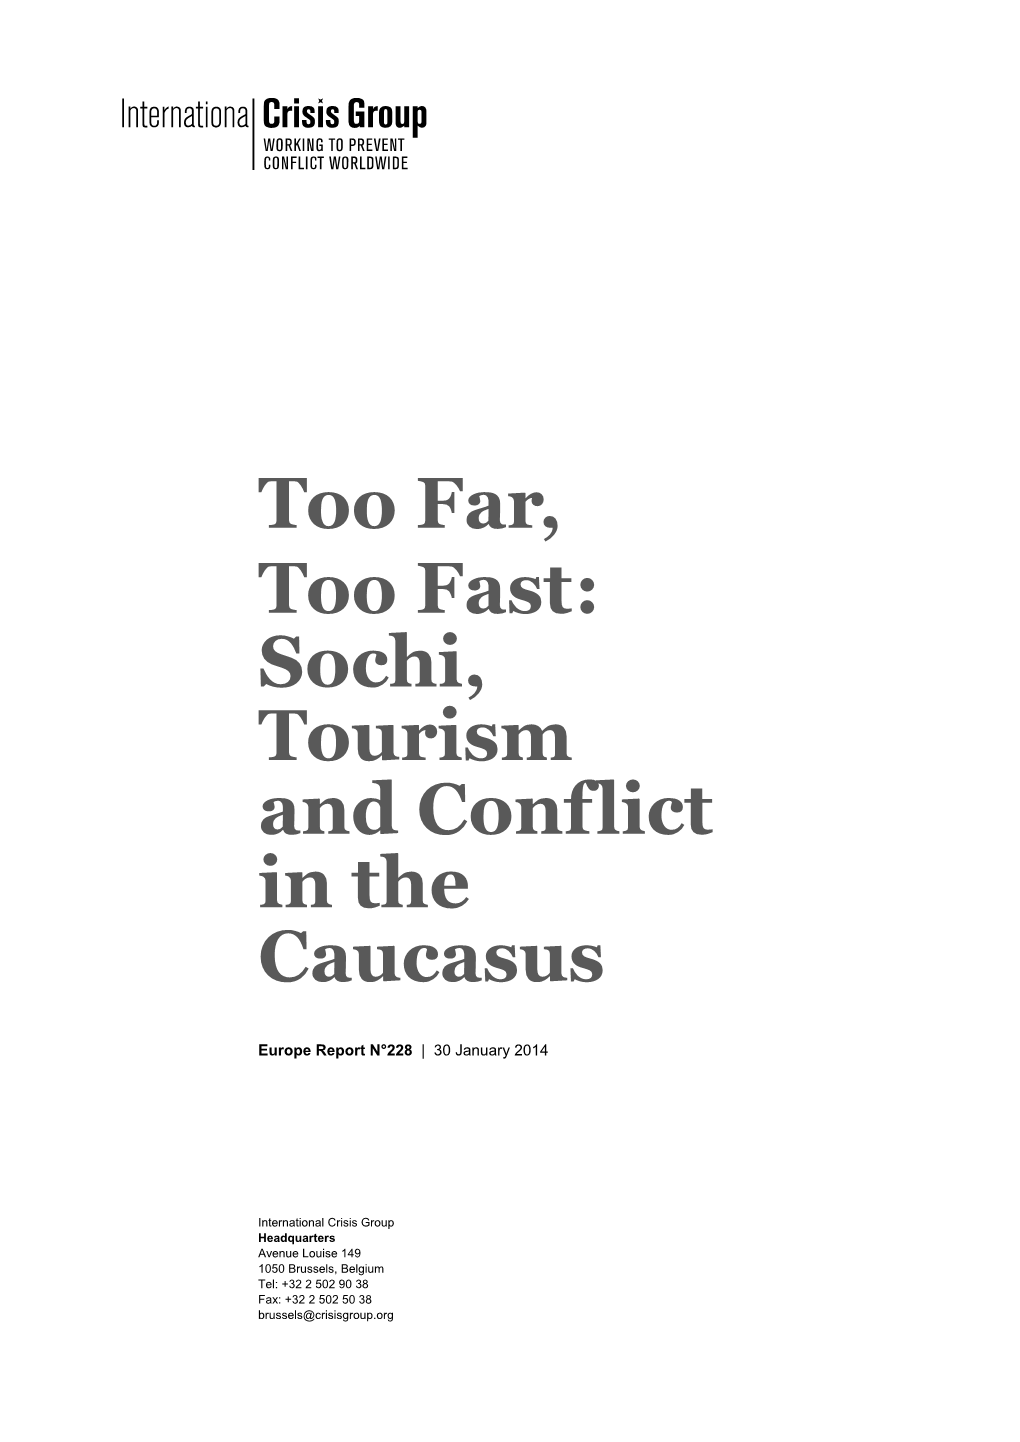 Sochi, Tourism and Conflict in the Caucasus